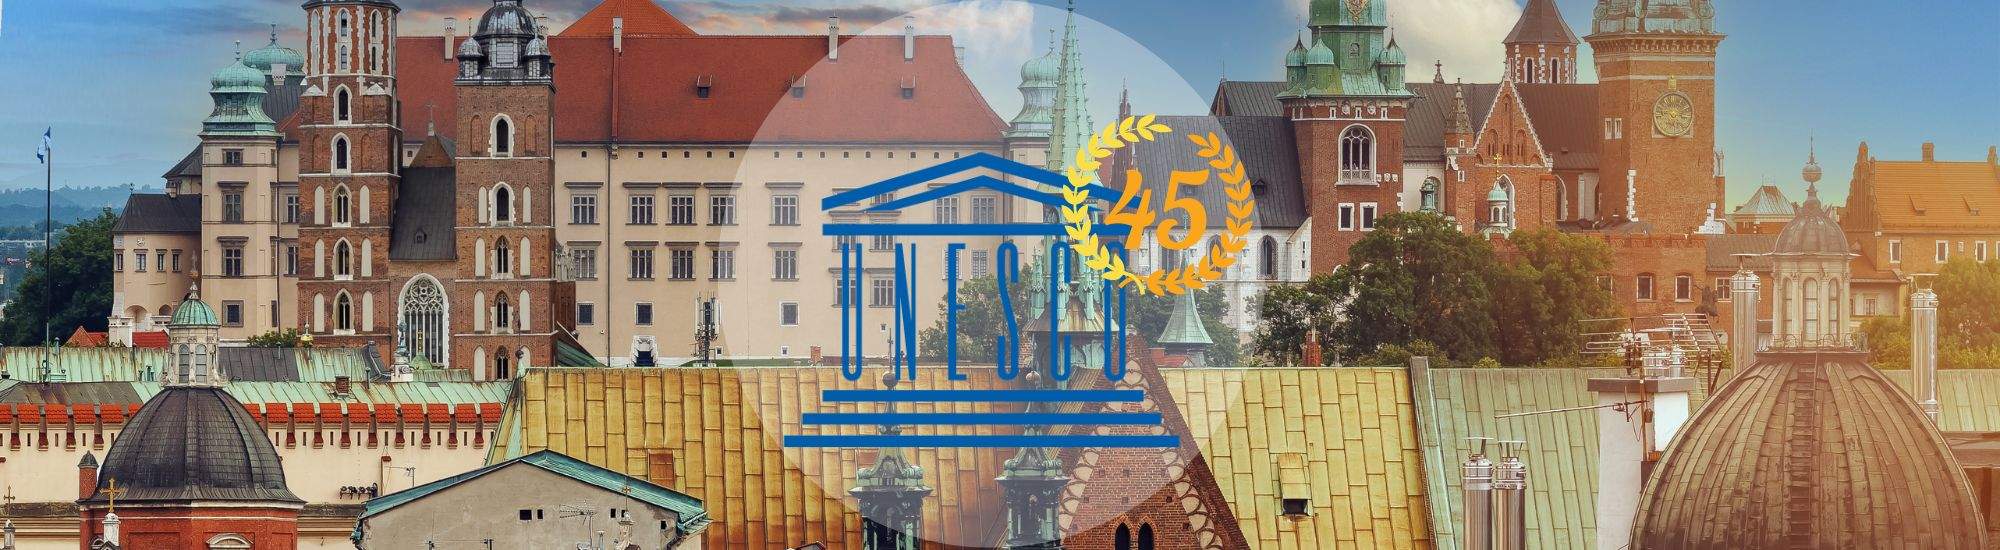 Krakau feiert 45 Jahre UNESCO-Welterbeliste